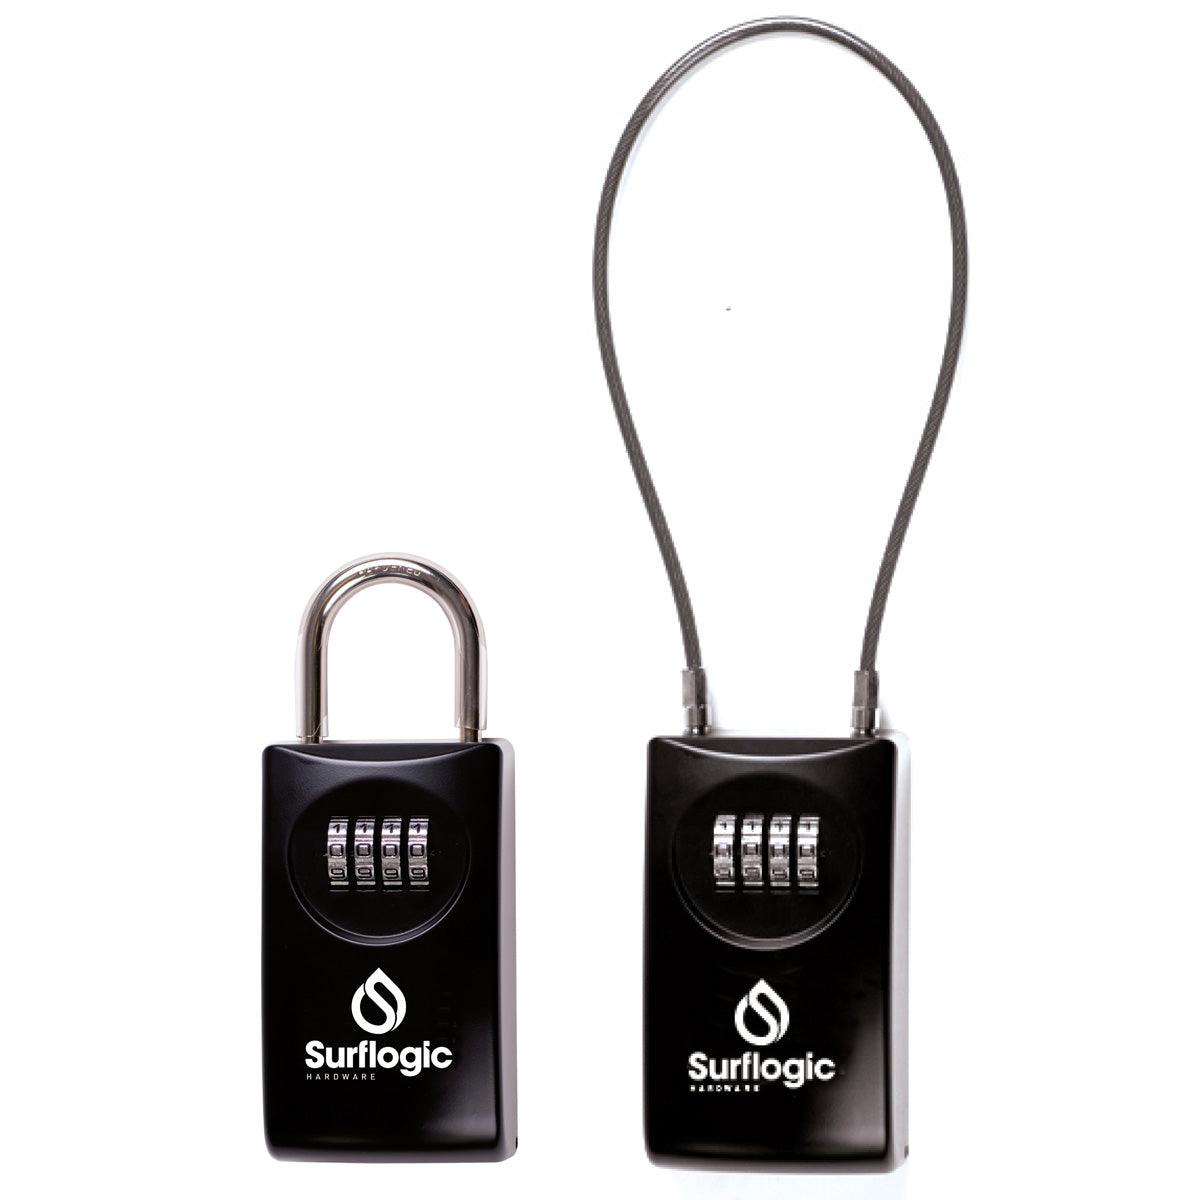 Surflogic Key Security Lock Double System - Kiteshop.com